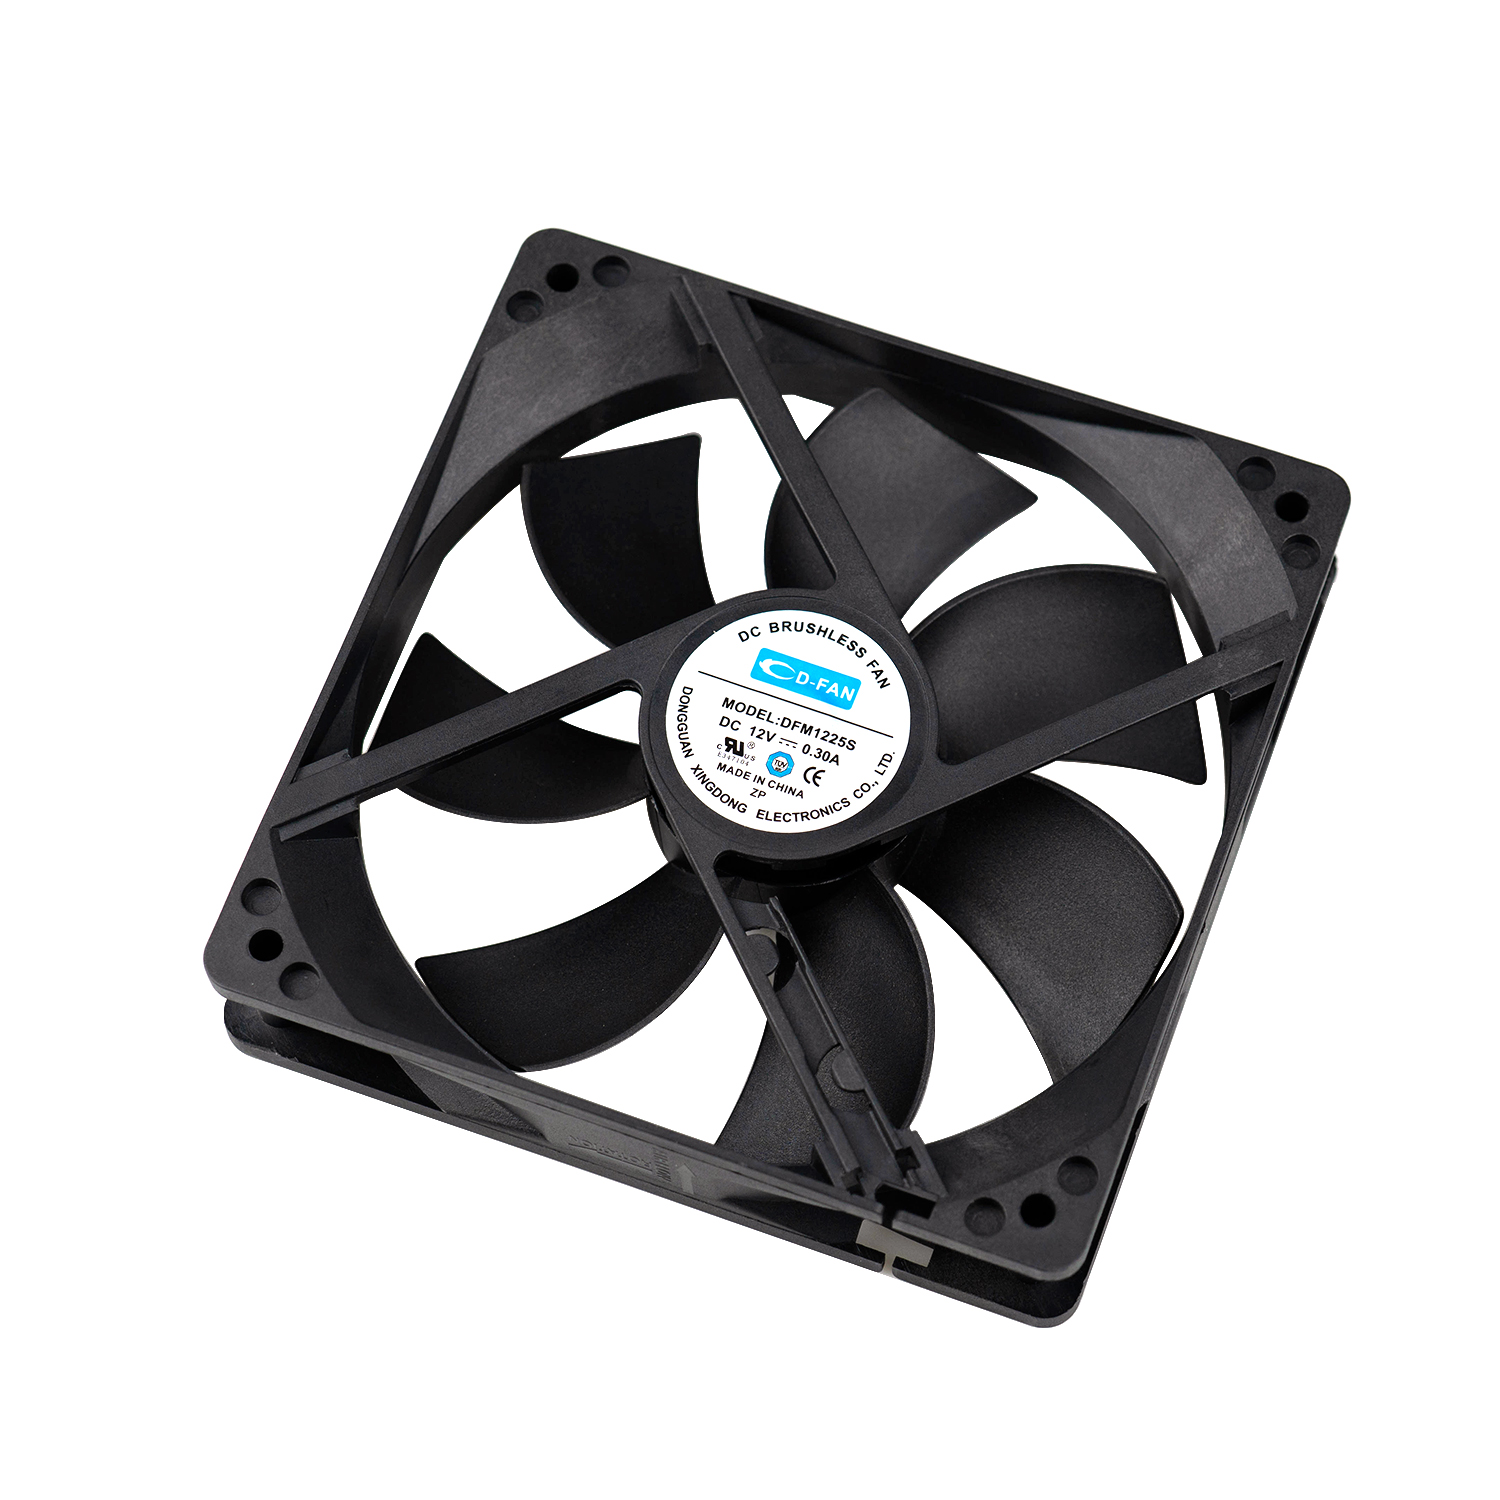 12volt fans cooler 120mm high air volume chassis cooling fan server workstation high-speed mini cooling fan